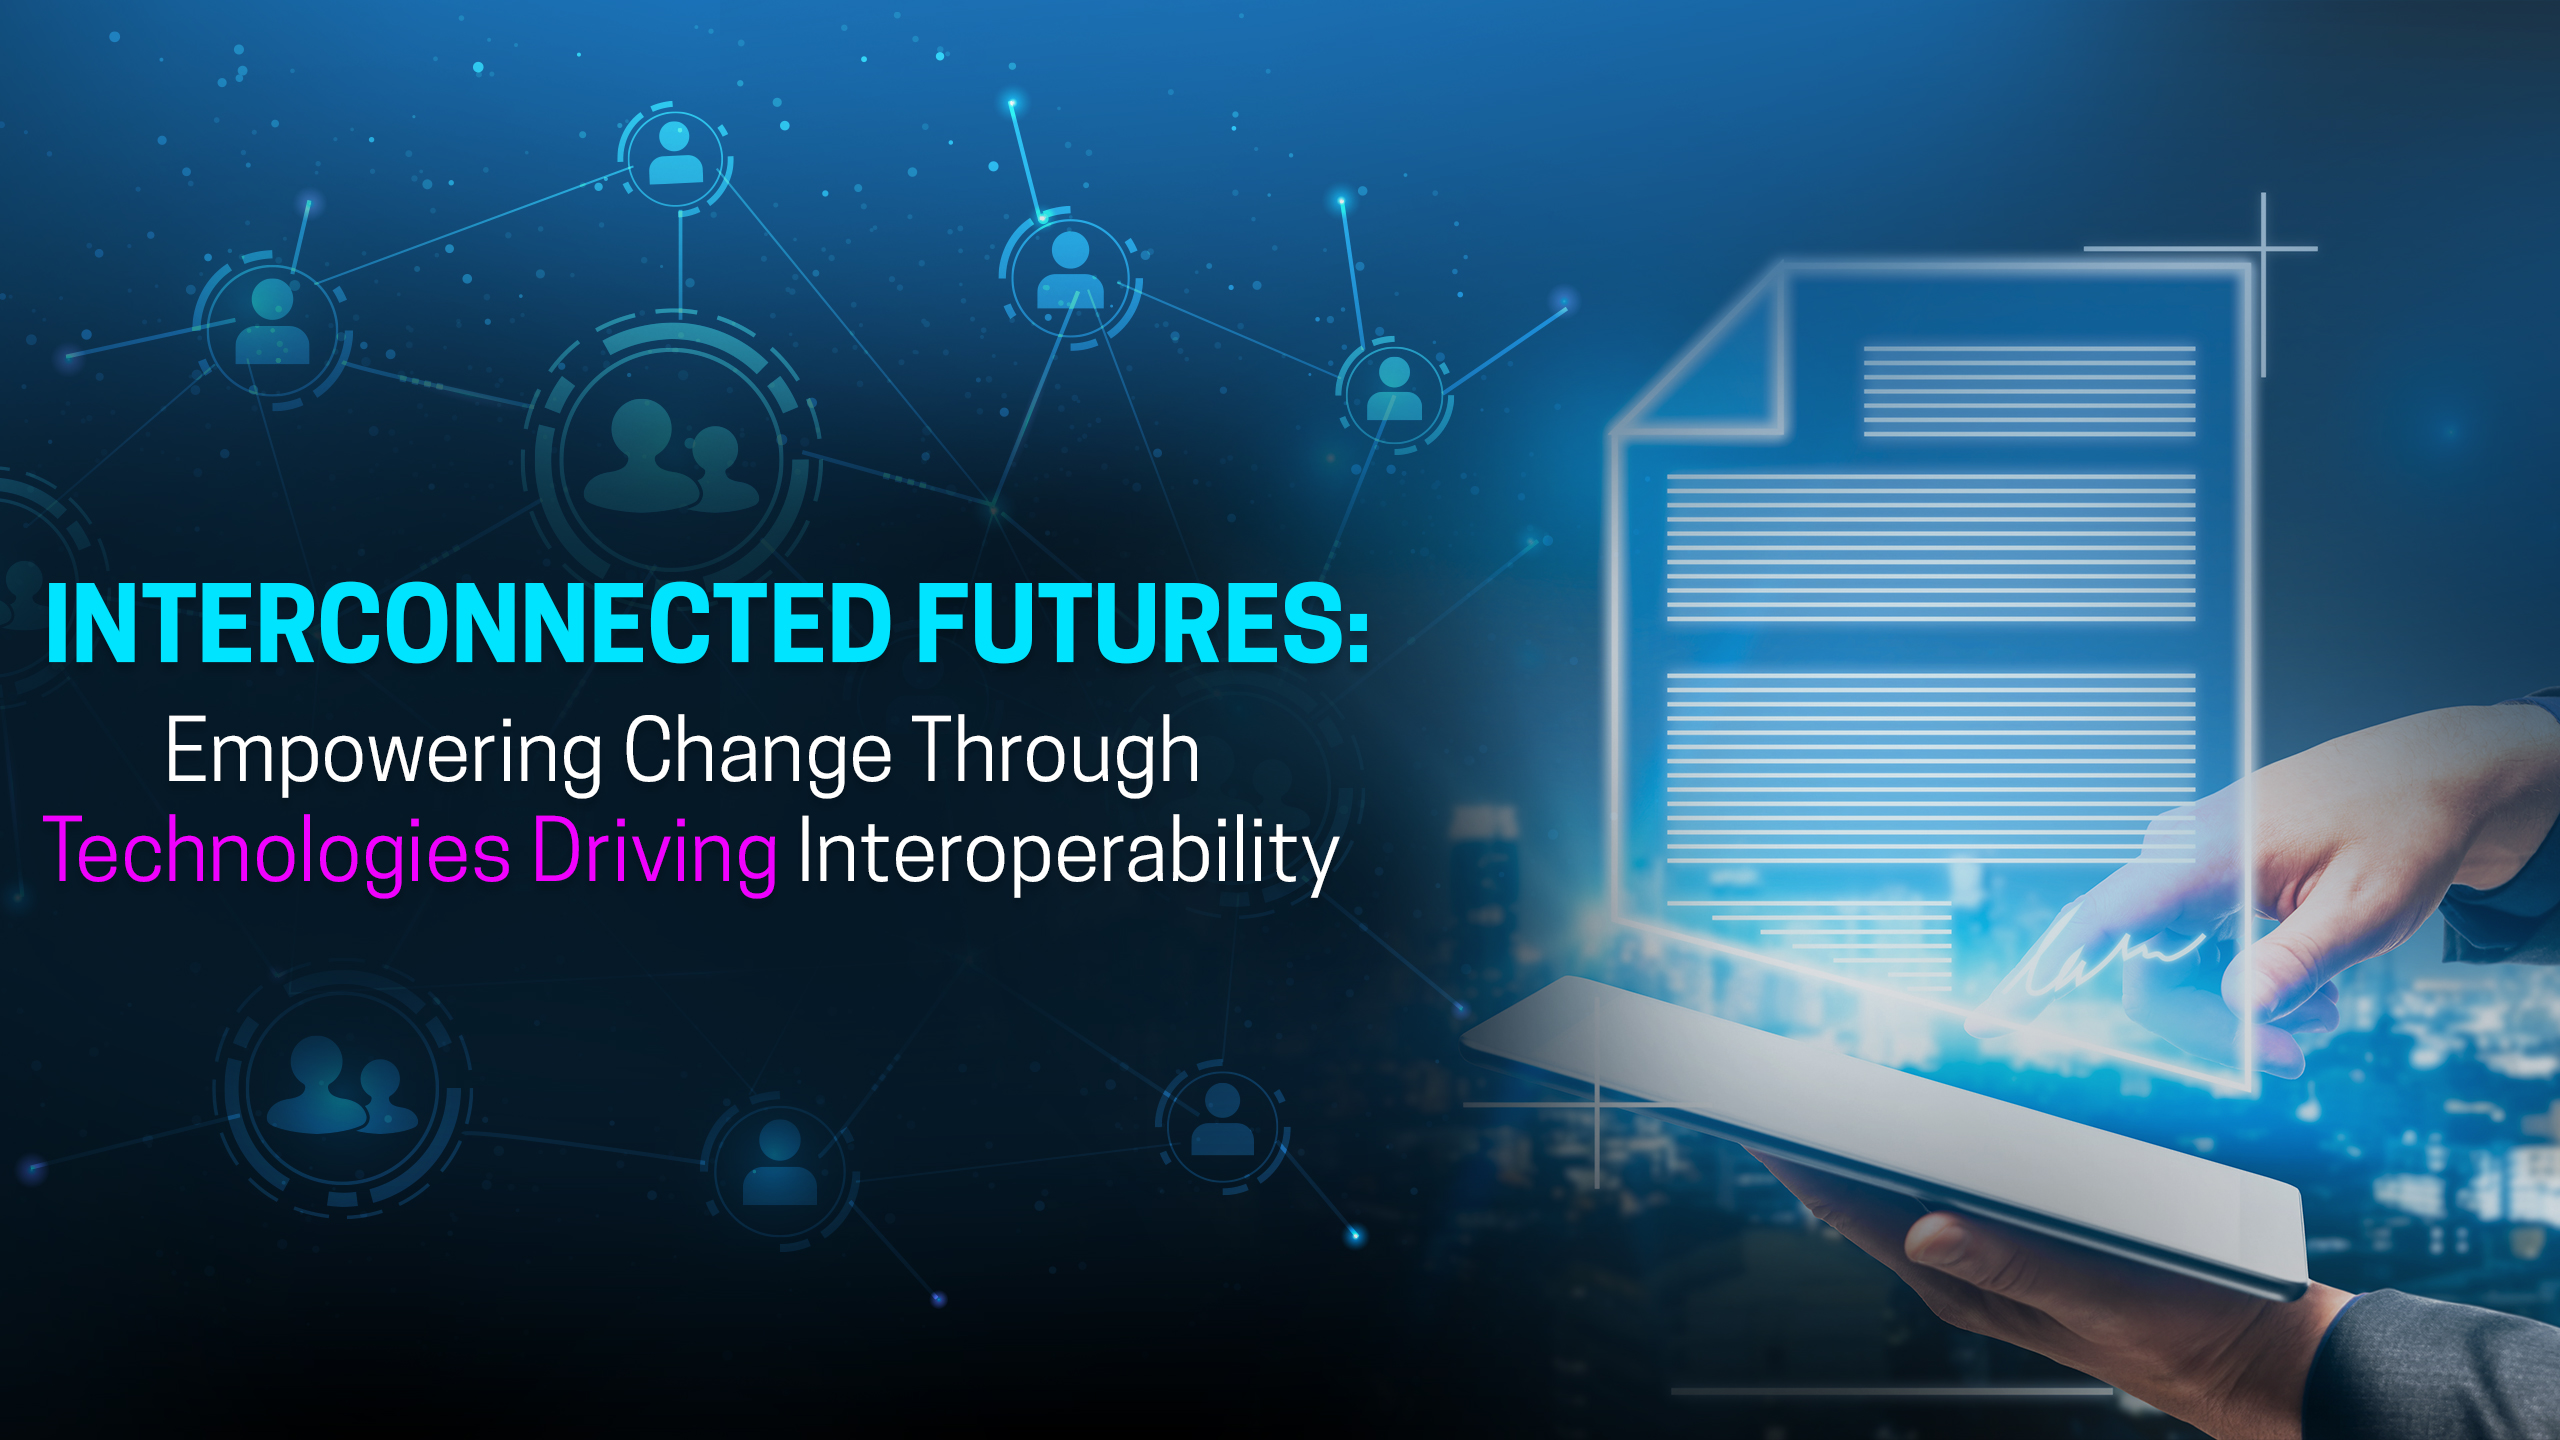 Technologies Driving Interoperability